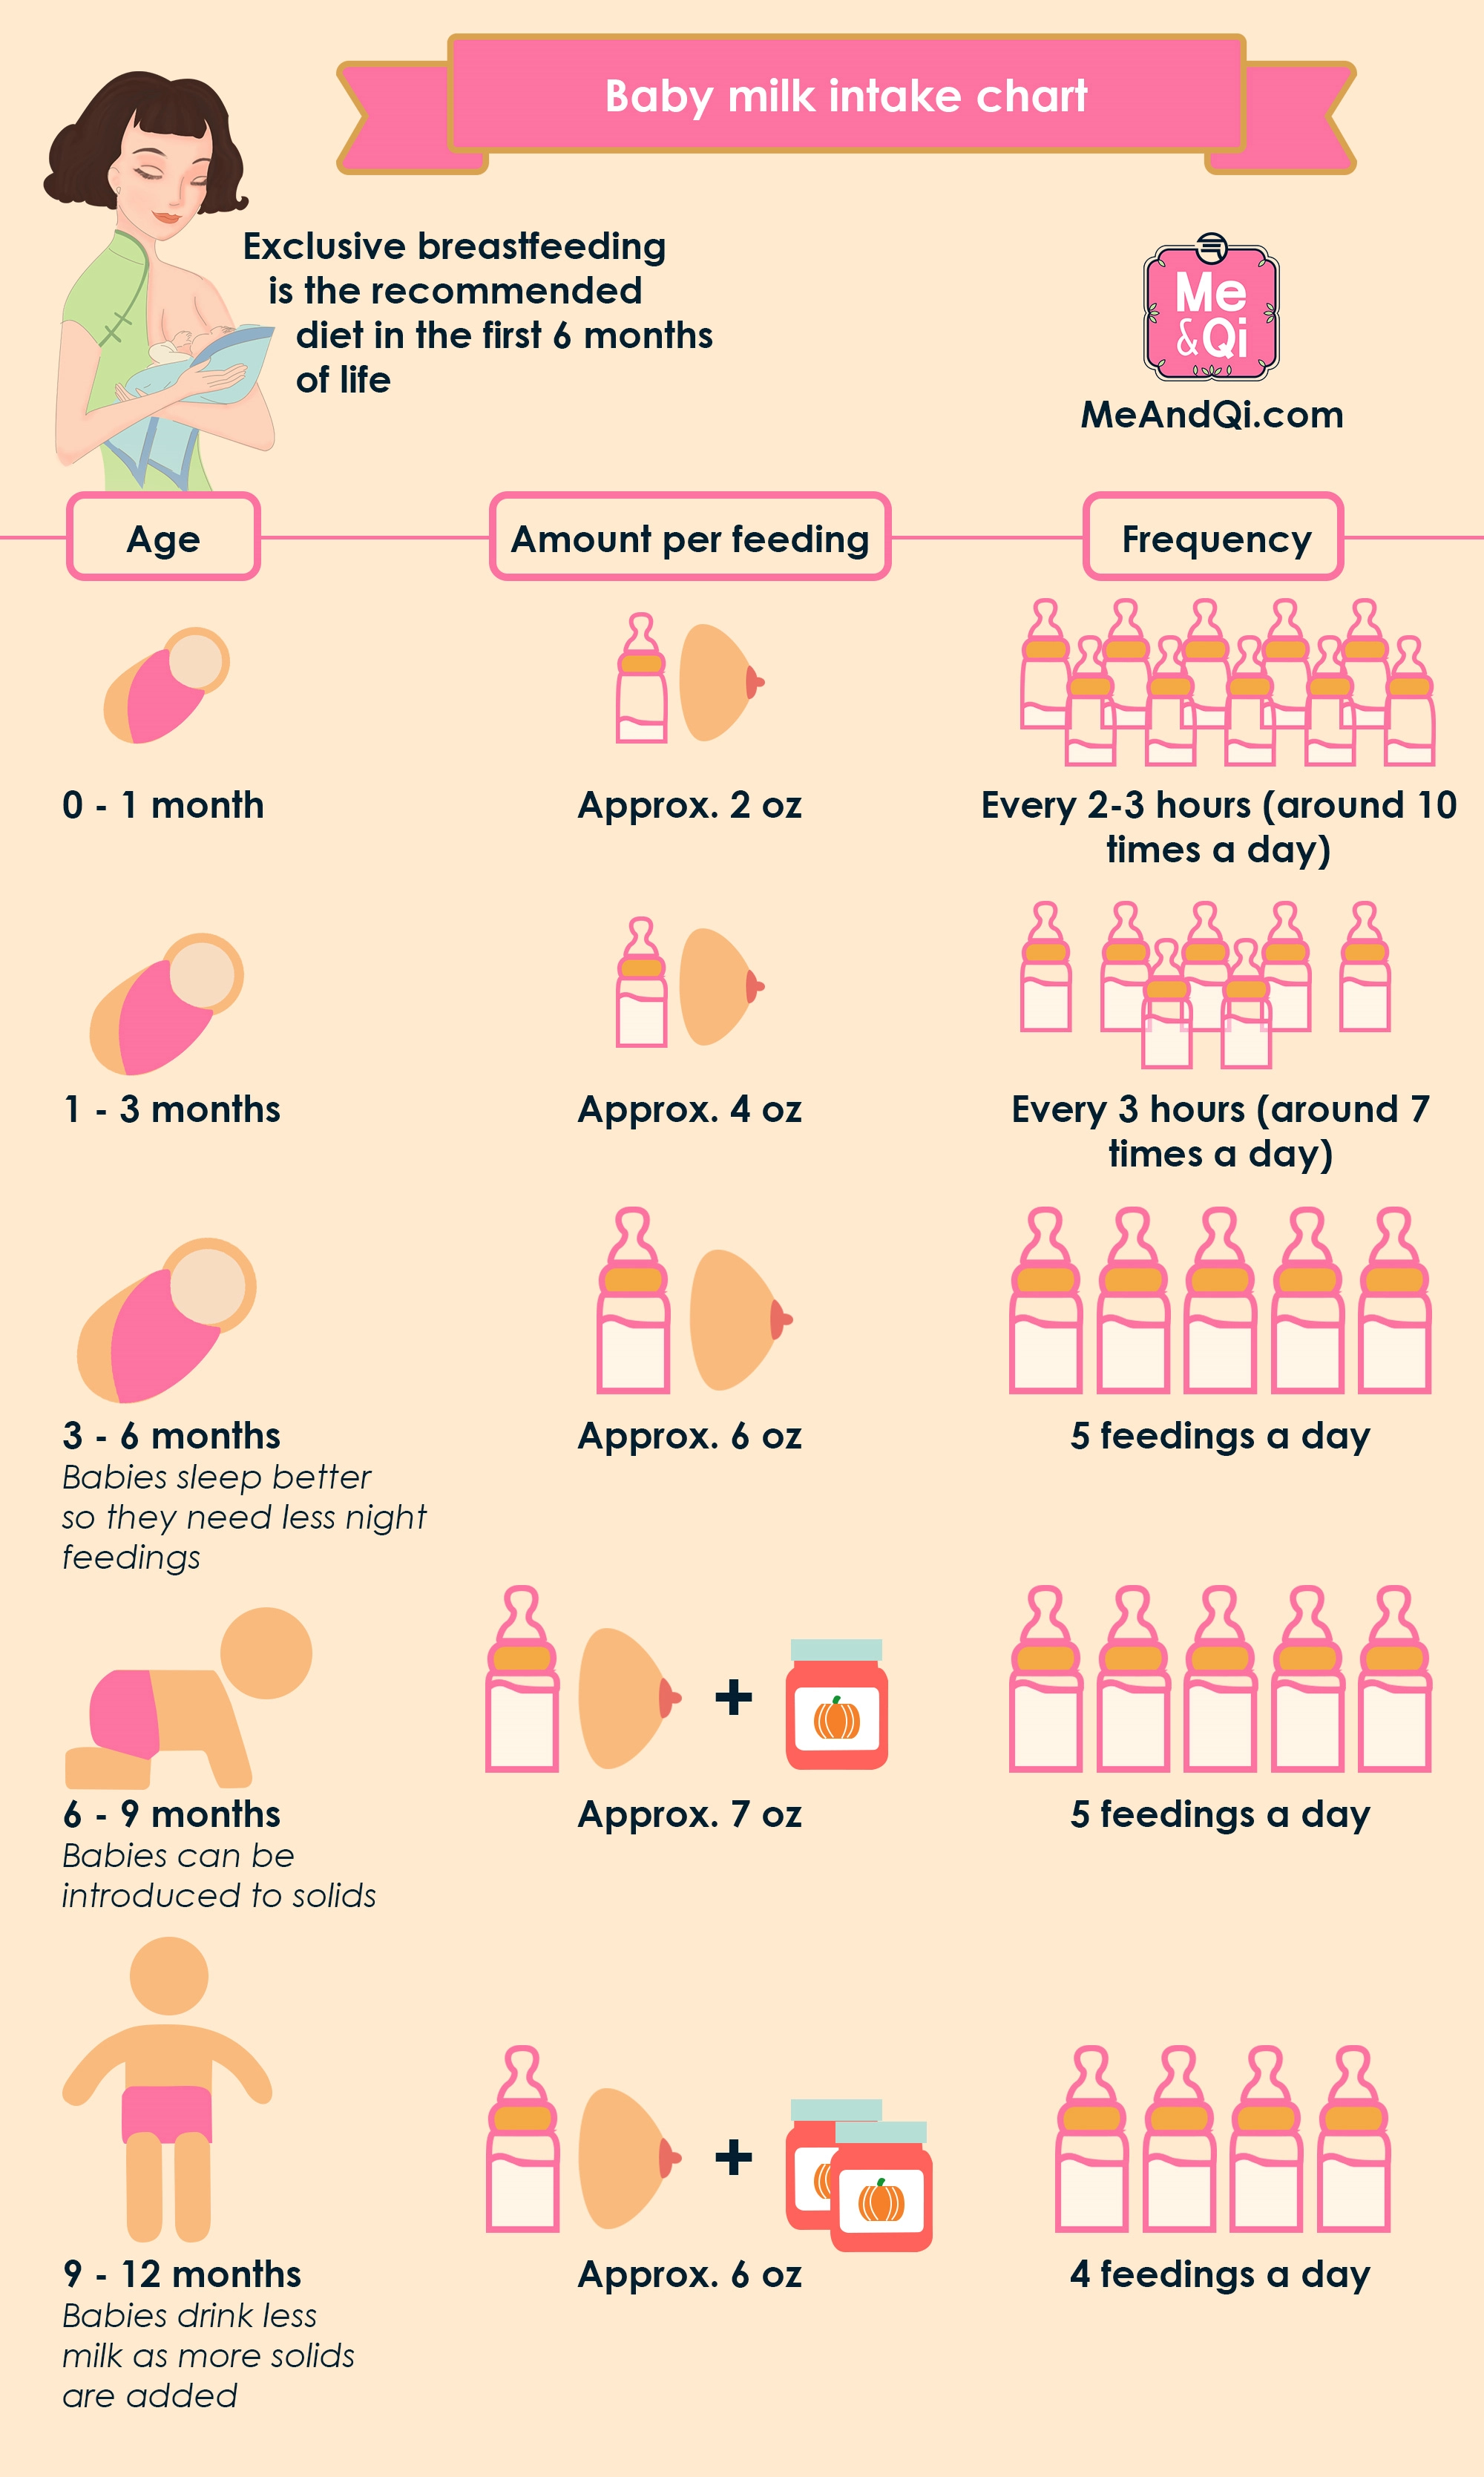 Baby milk intake chart